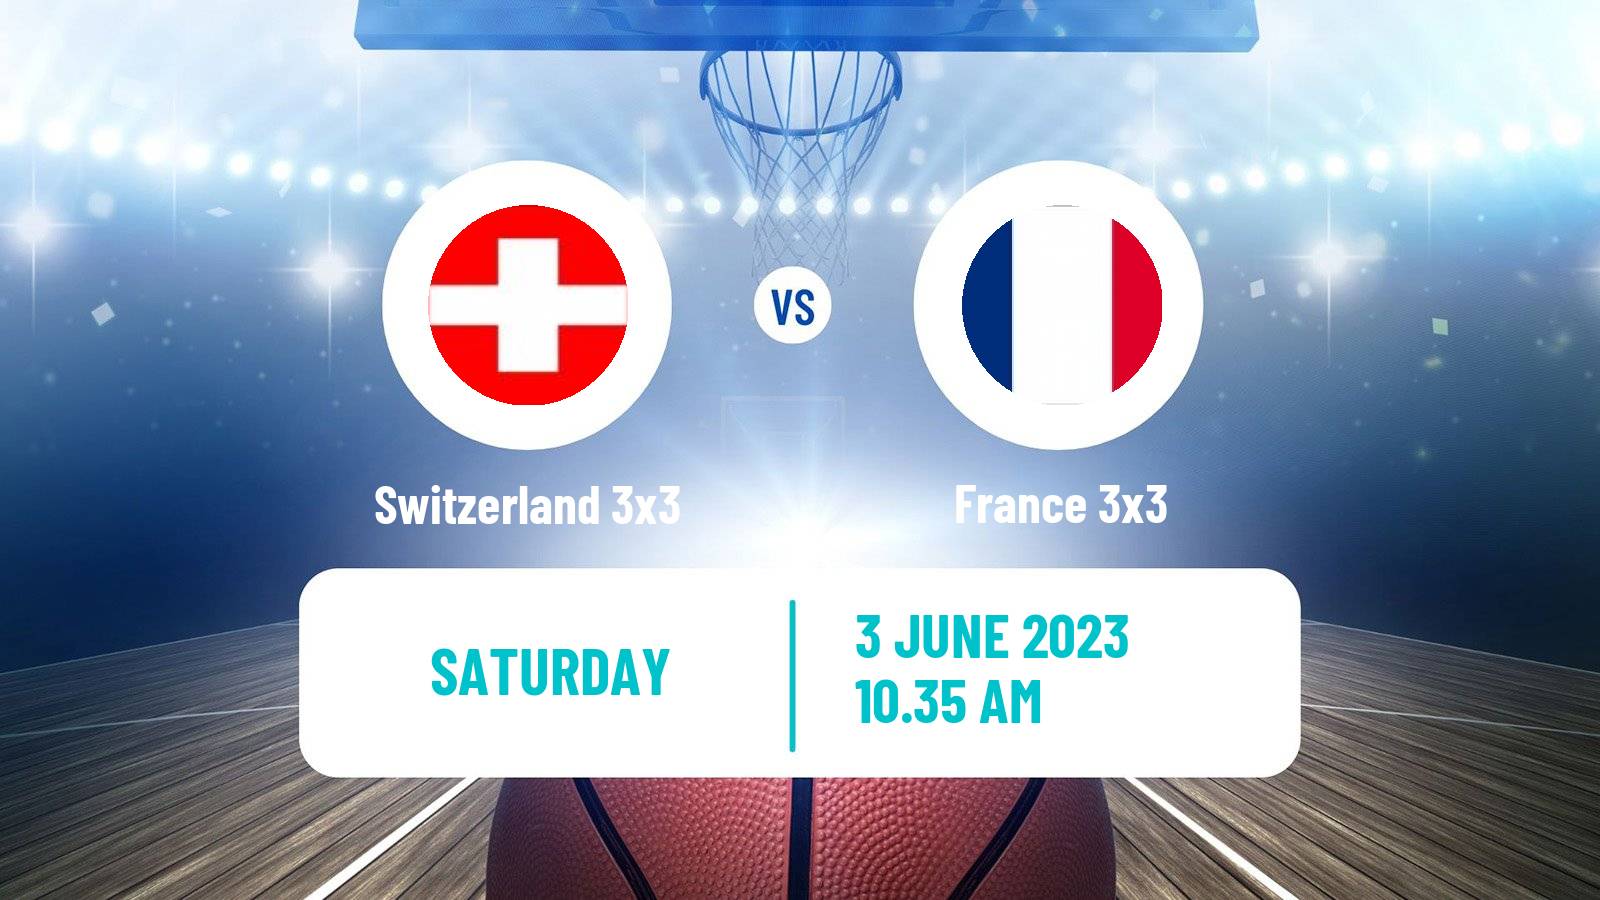 Basketball World Cup Basketball 3x3 Switzerland 3x3 - France 3x3